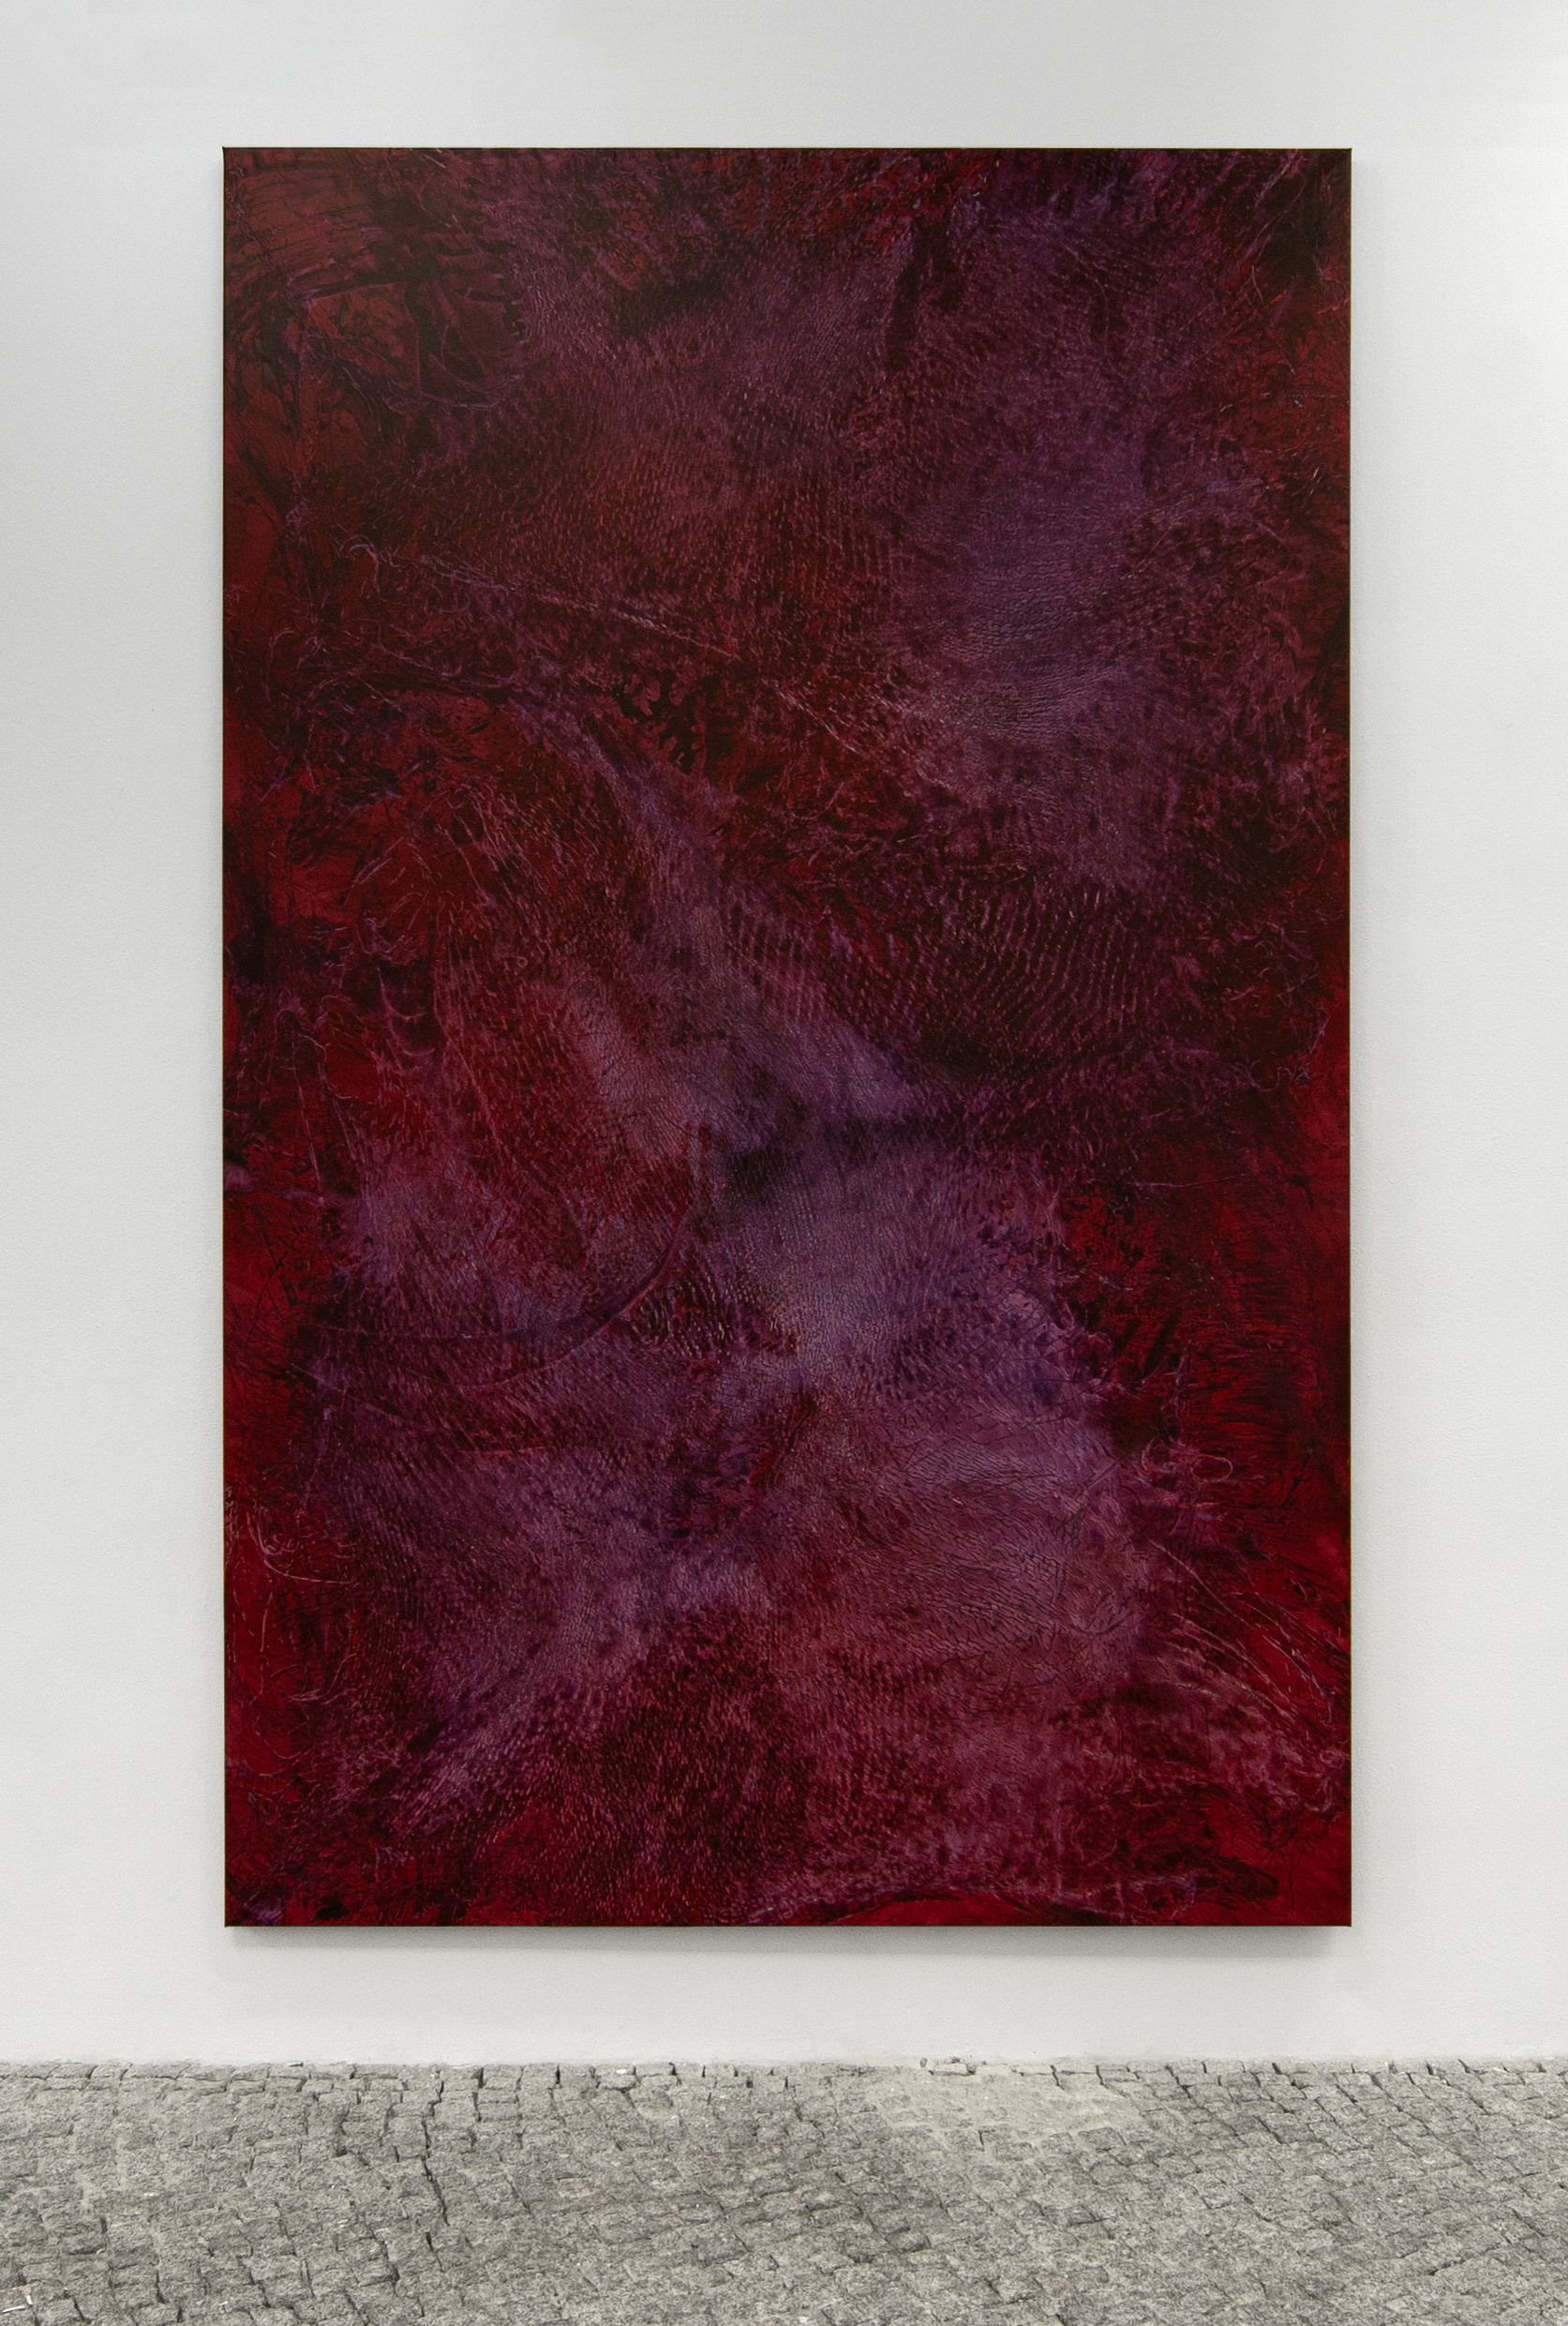 Alizée Gazeau, H_22_7, 2022, acrylic and ink on canvas, 300x190 cm